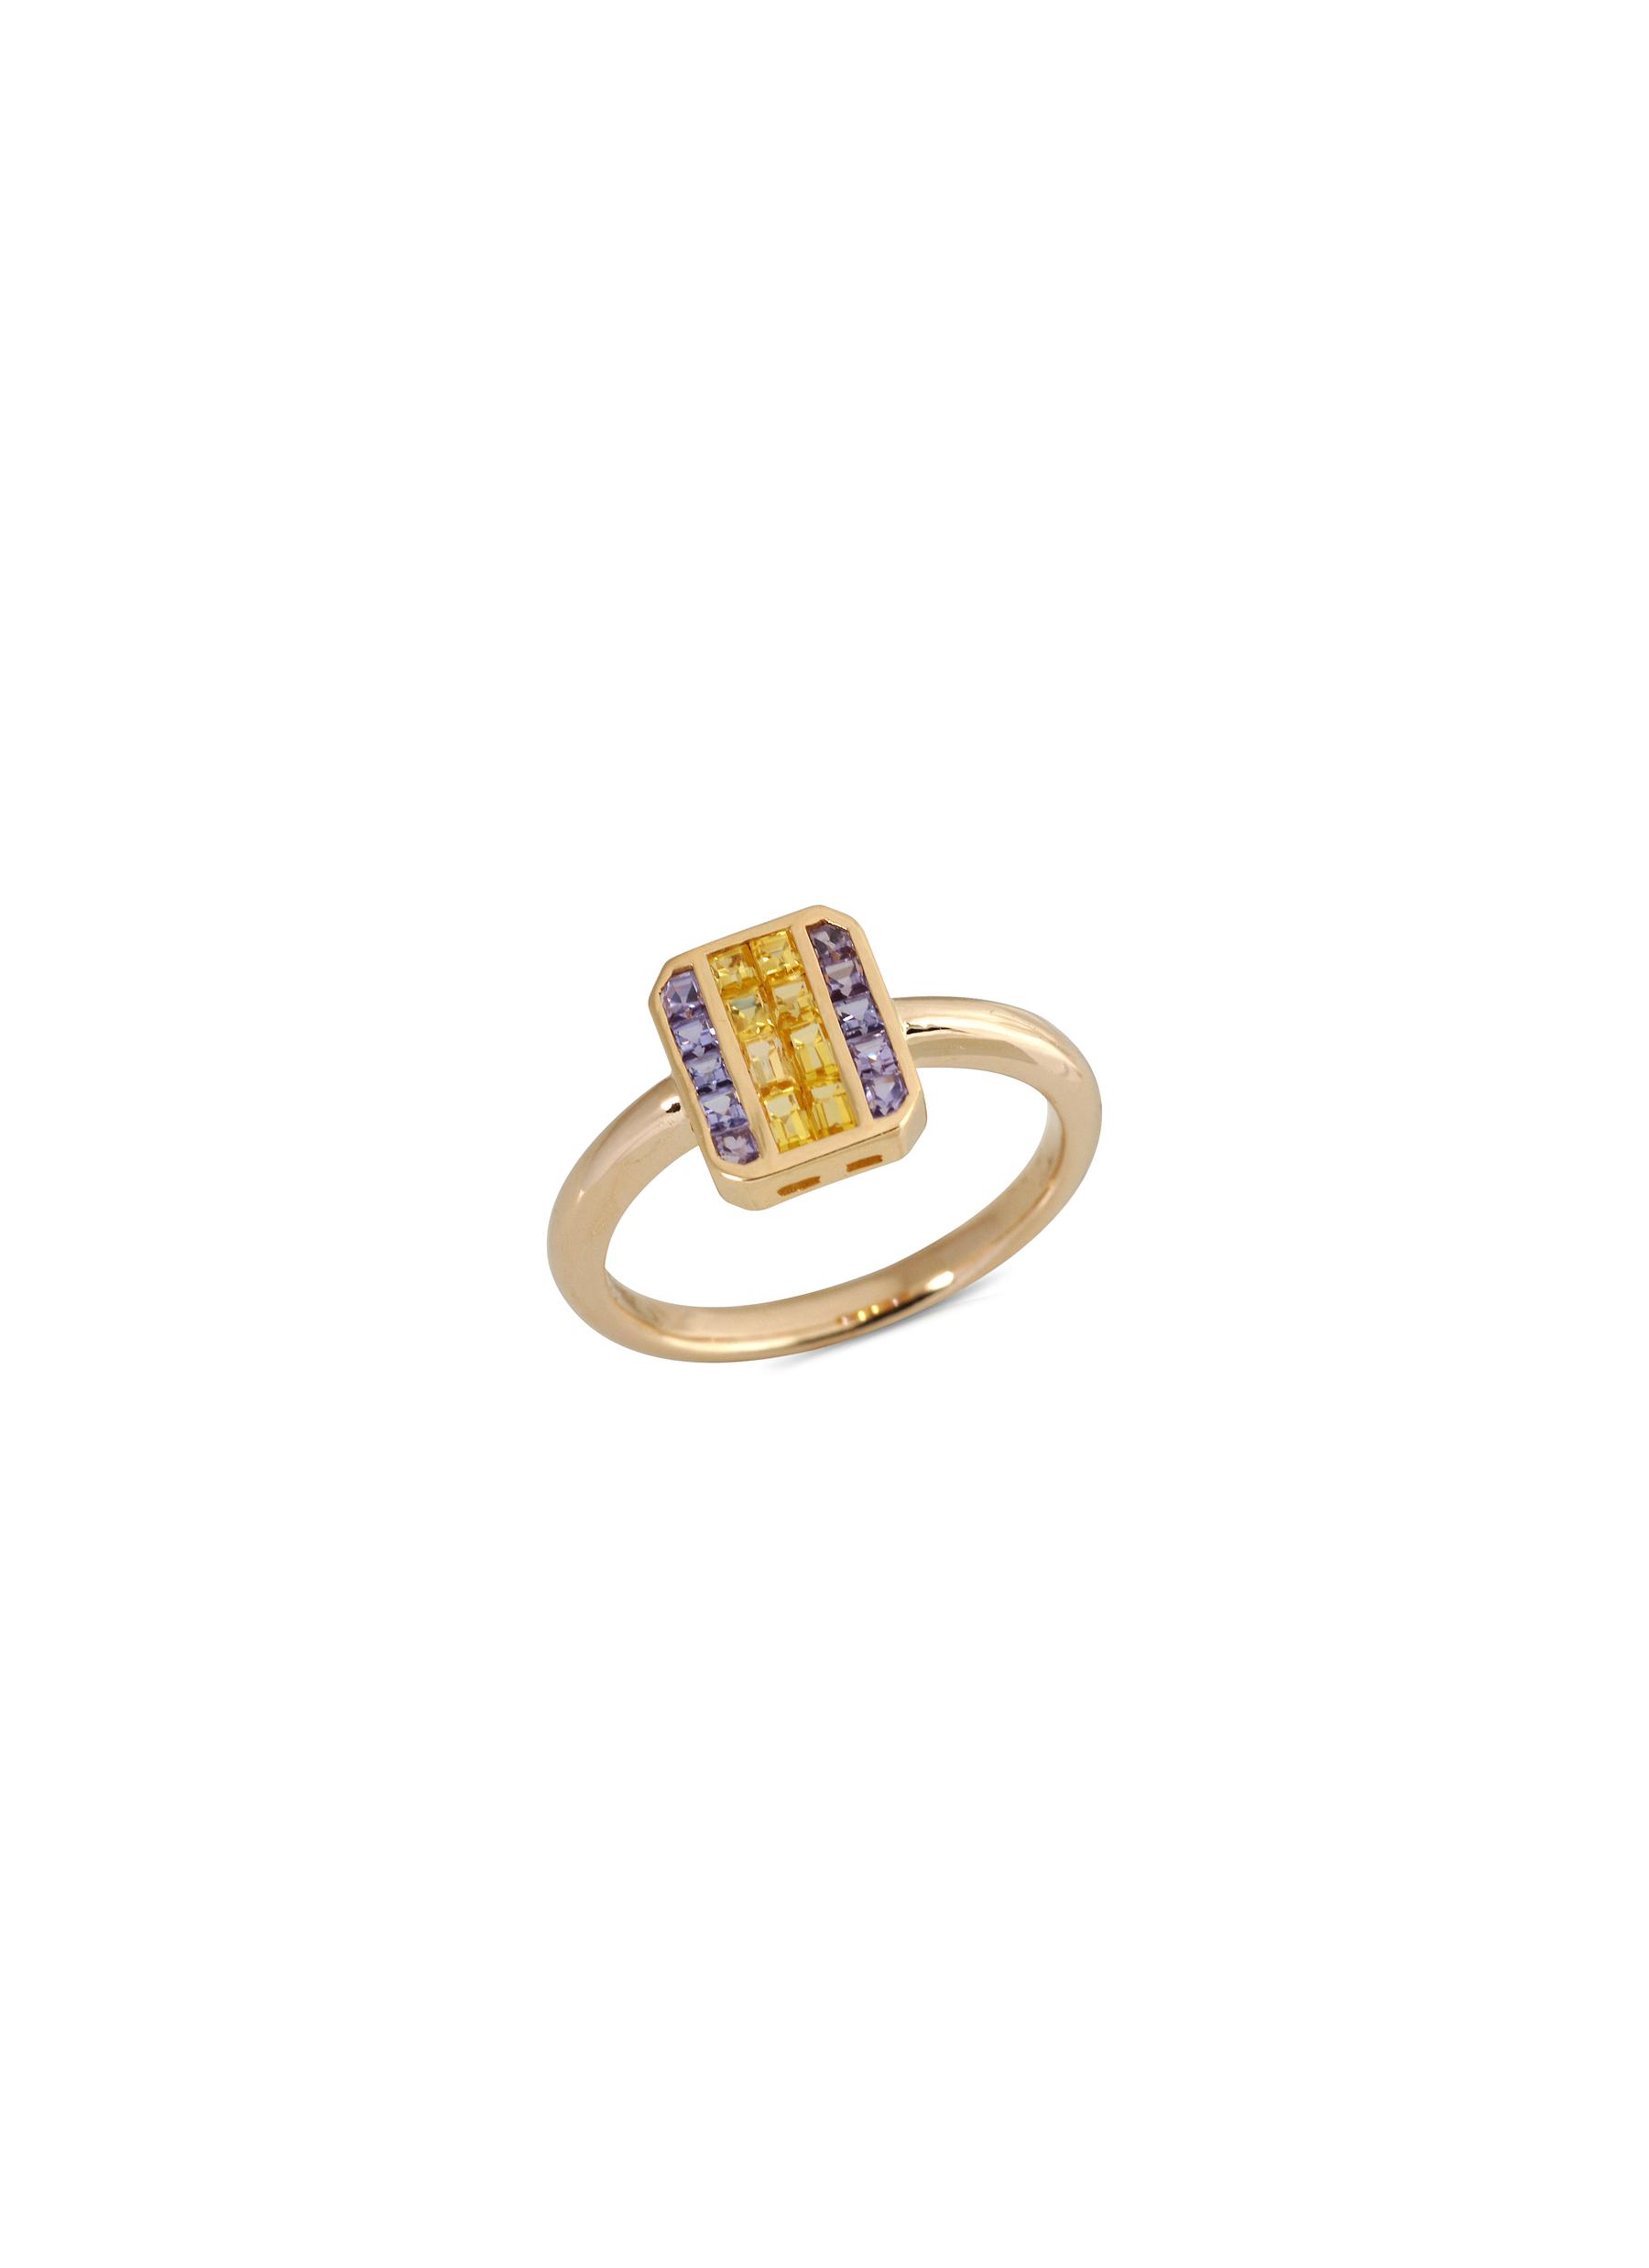 KAVANT & SHARART ‘GeoArt' Yellow And Purple Sapphire 18K Gold Ring